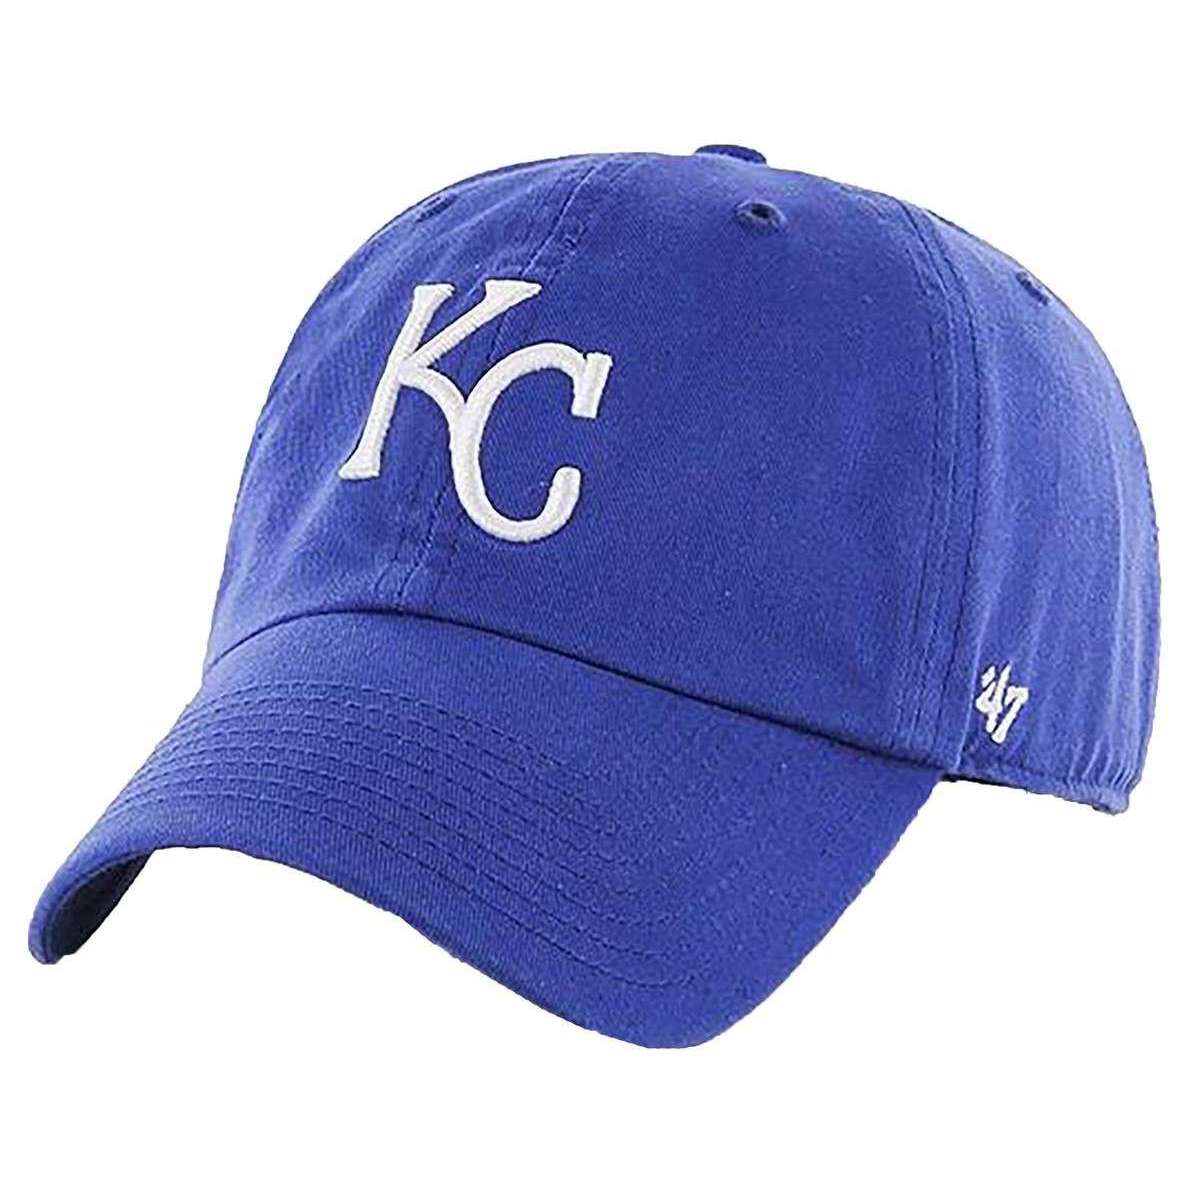 Kansas City Royals Men's 47 Brand One Size Hat